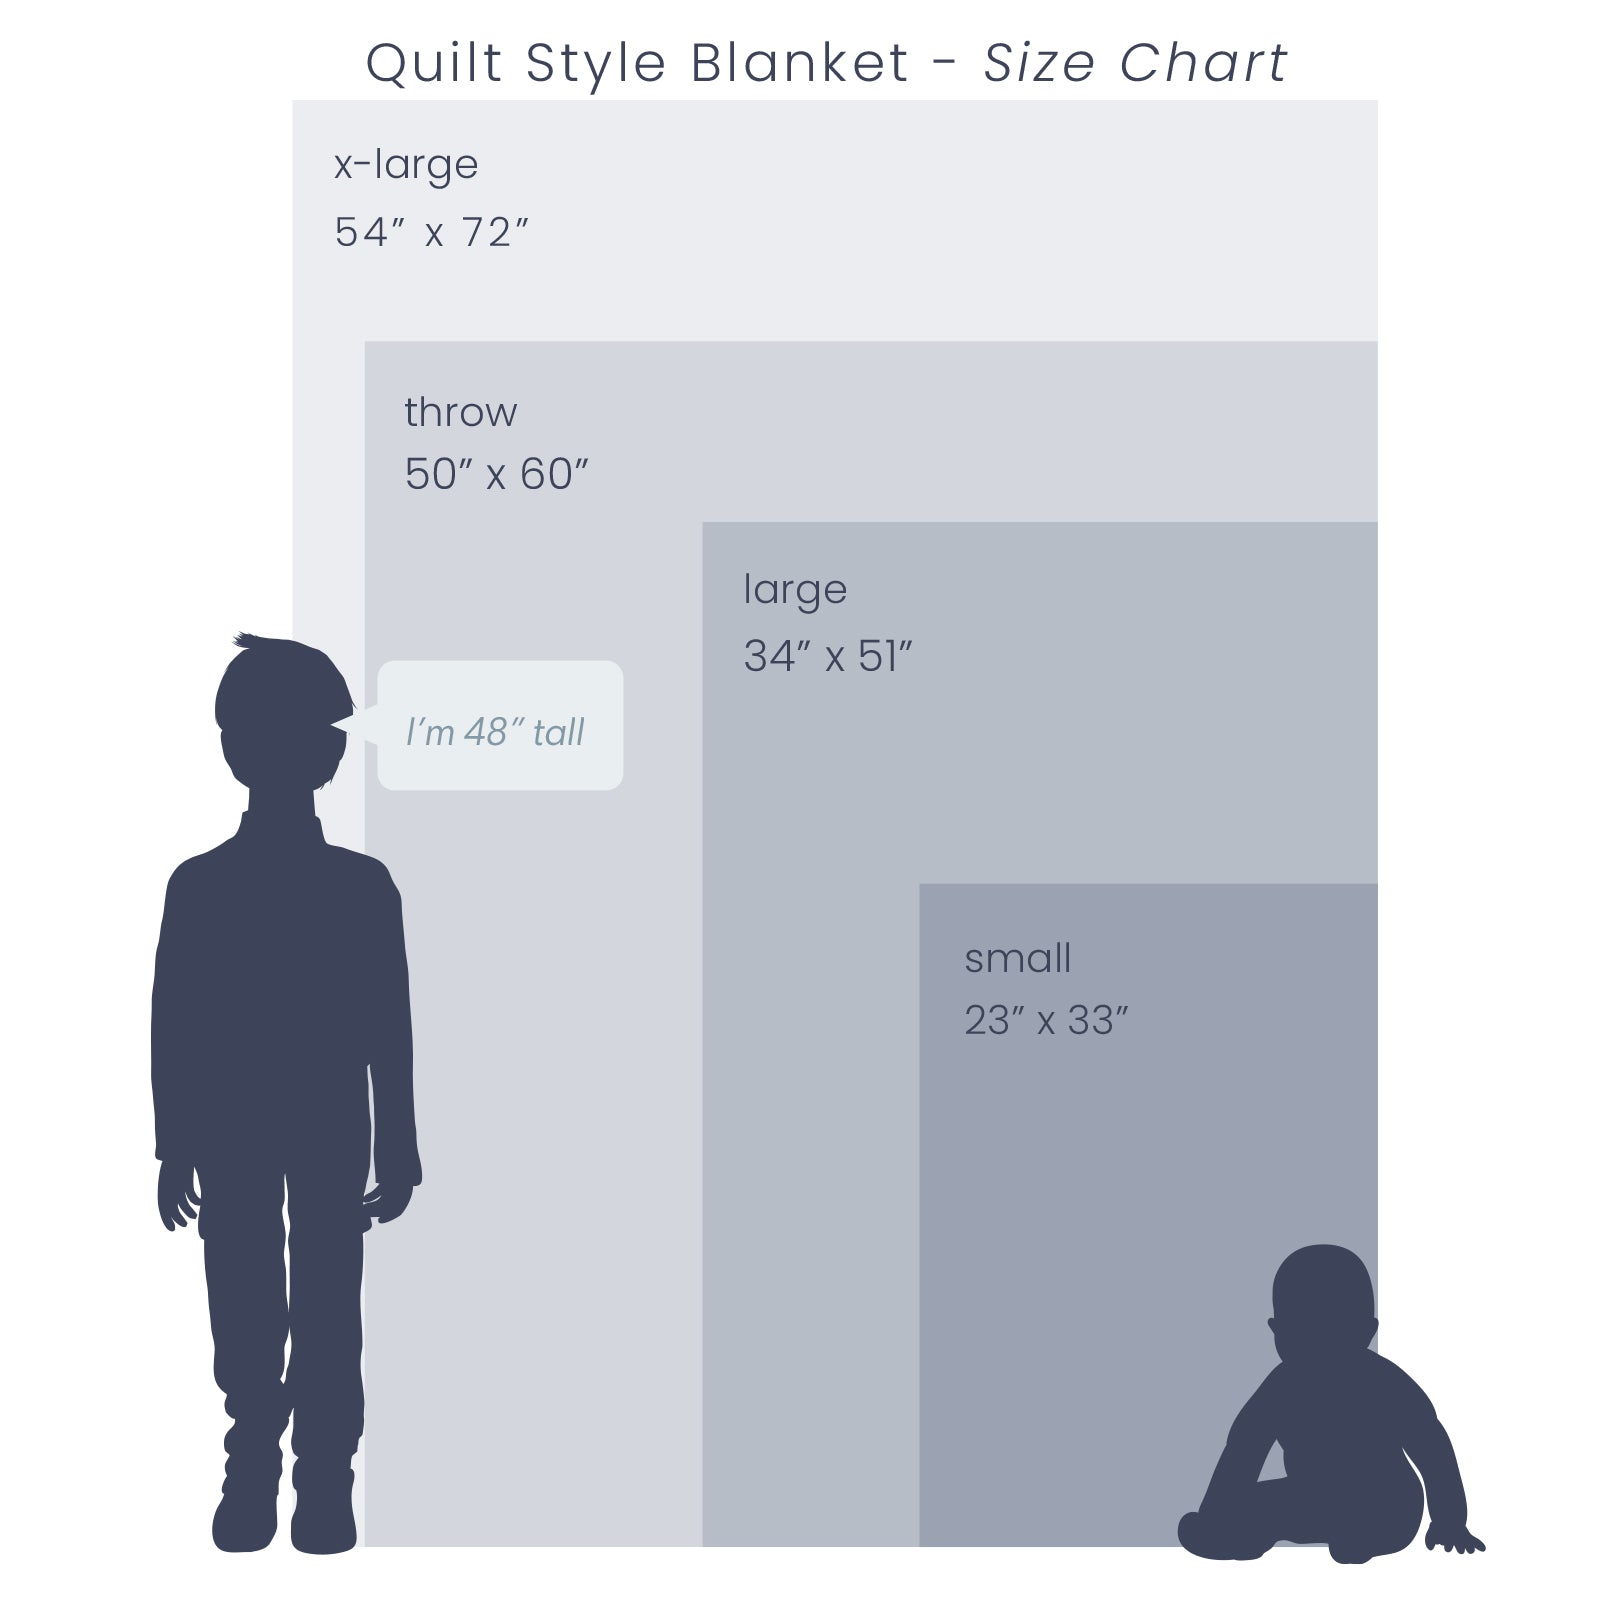 Quilt blanket size chart